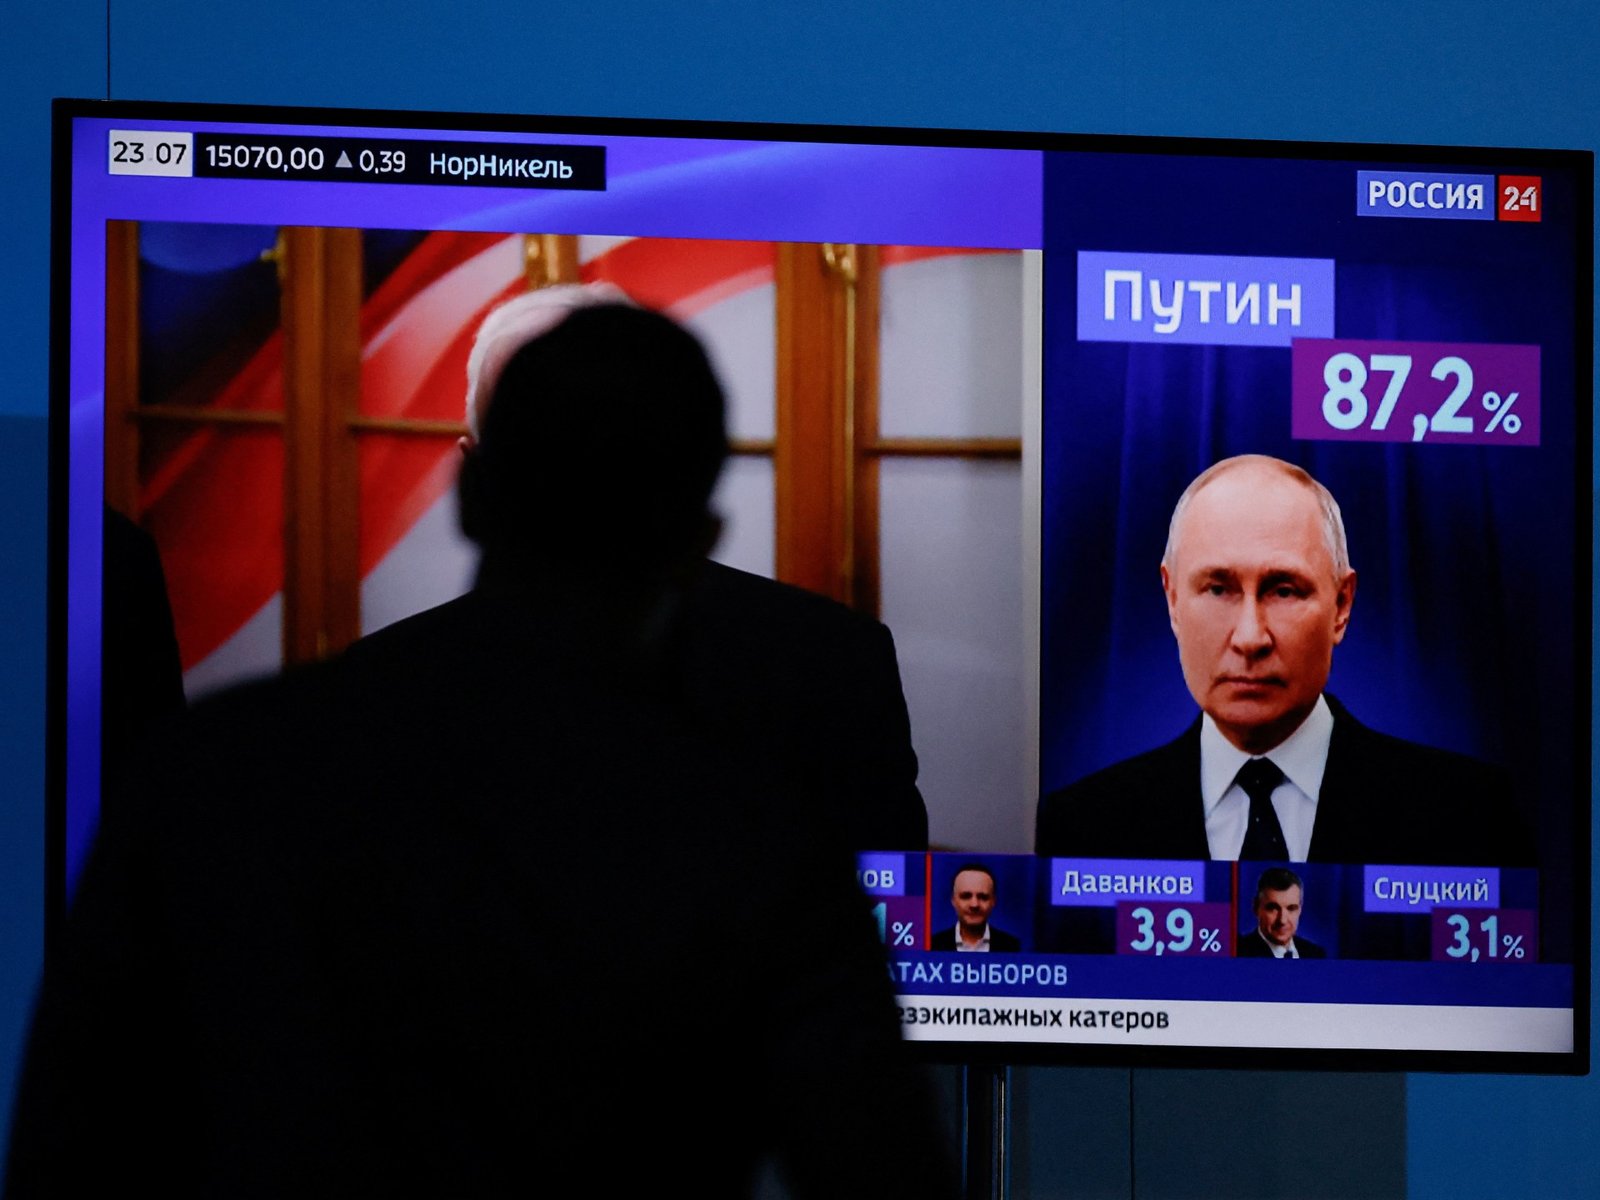 Russias Putin hails victory in election criticised for lacking legitimacy | Vladimir Putin News